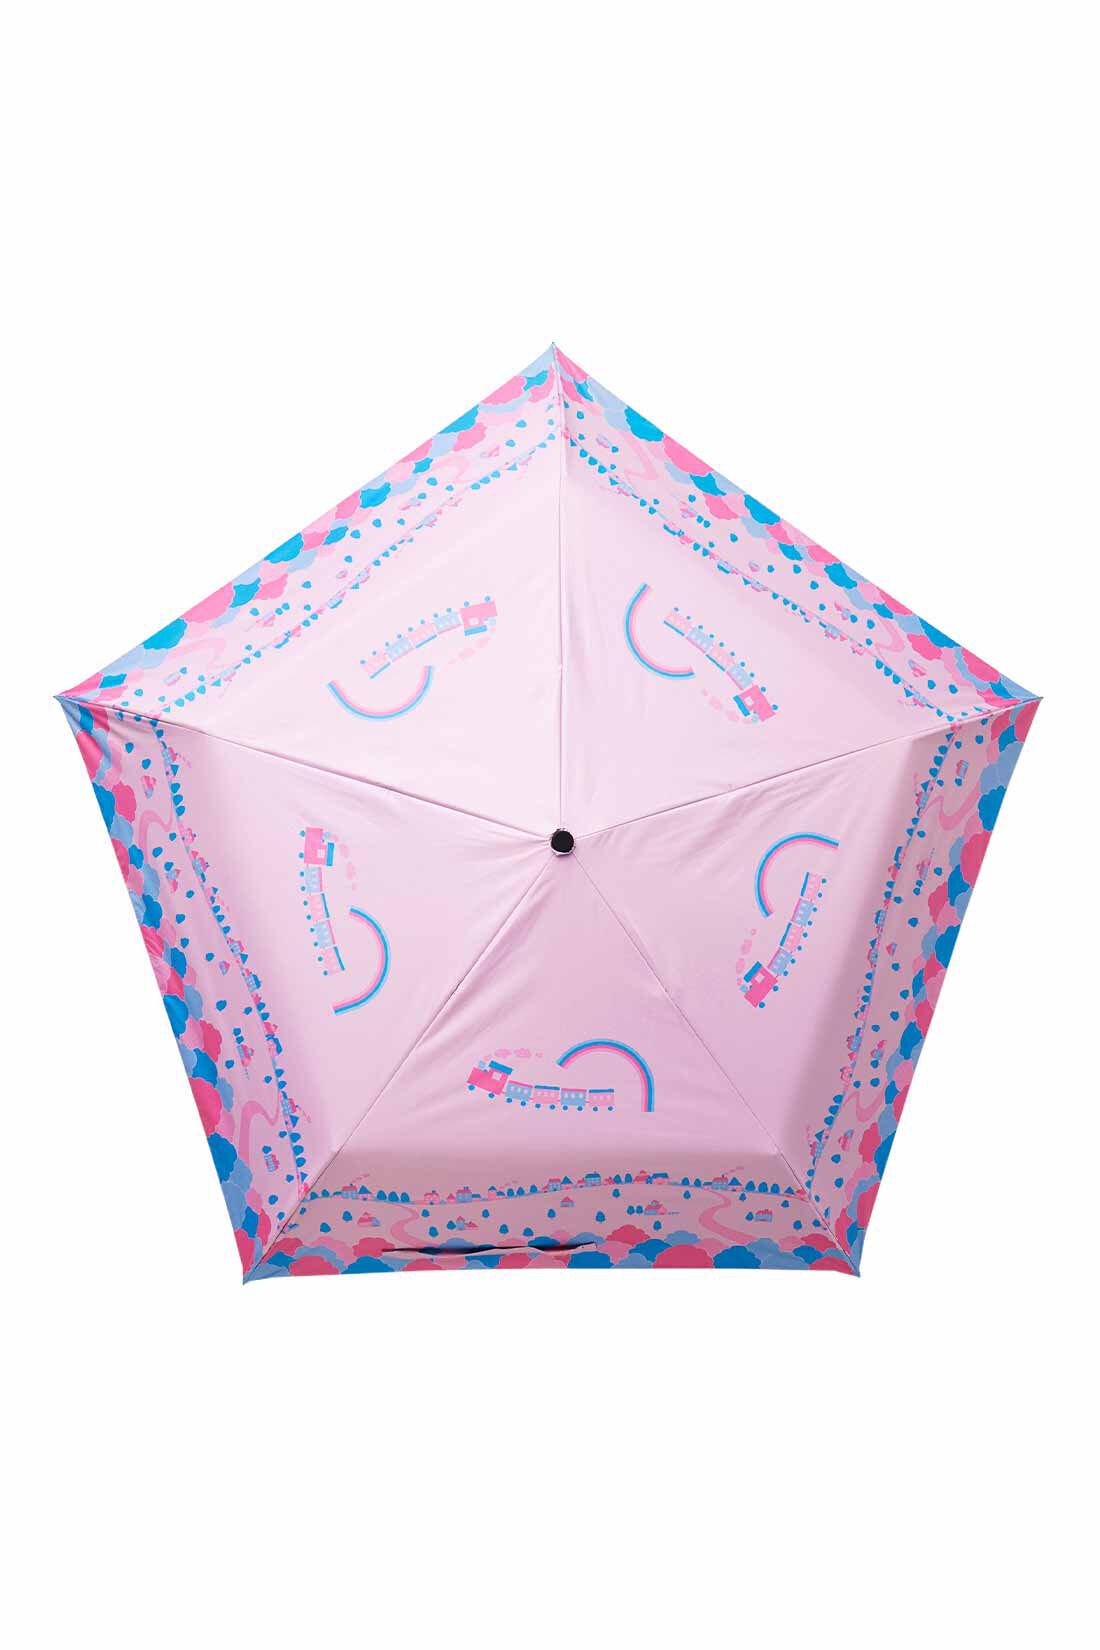 Real Stock|シモジマコラボ 軽量晴雨兼用折りたたみ傘〈シモジマトレイン〉